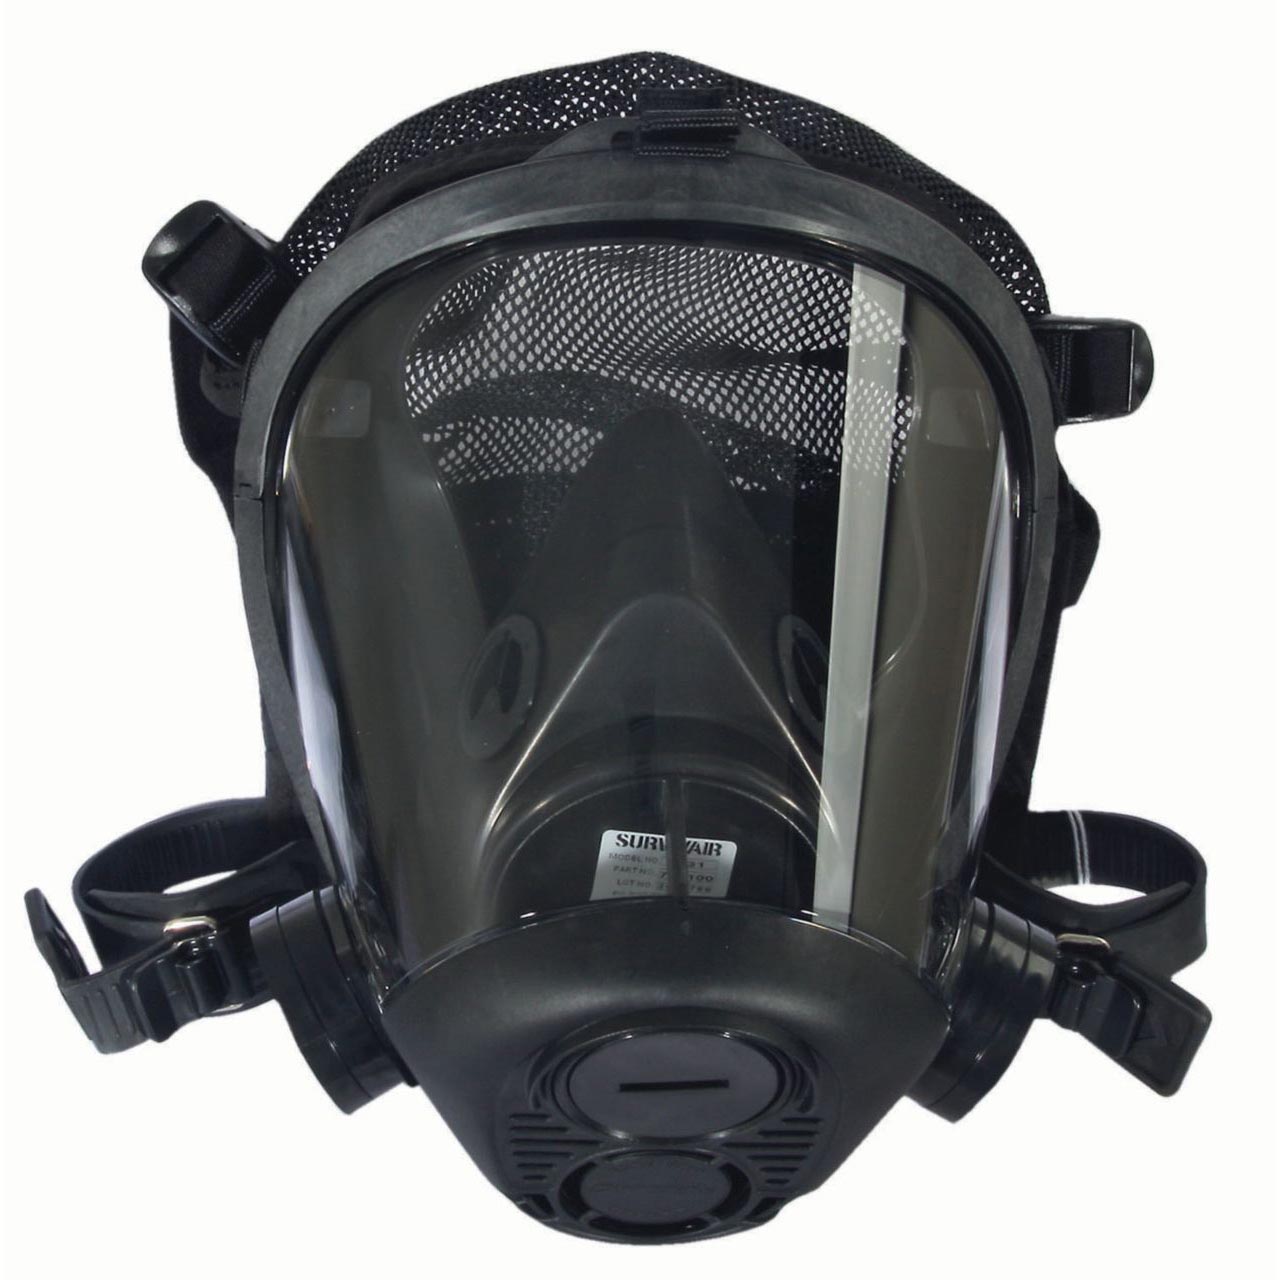 Honeywell Survivair Opti-Fit Tactical Gas Mask Facepiece with Mesh Headnet, Medium